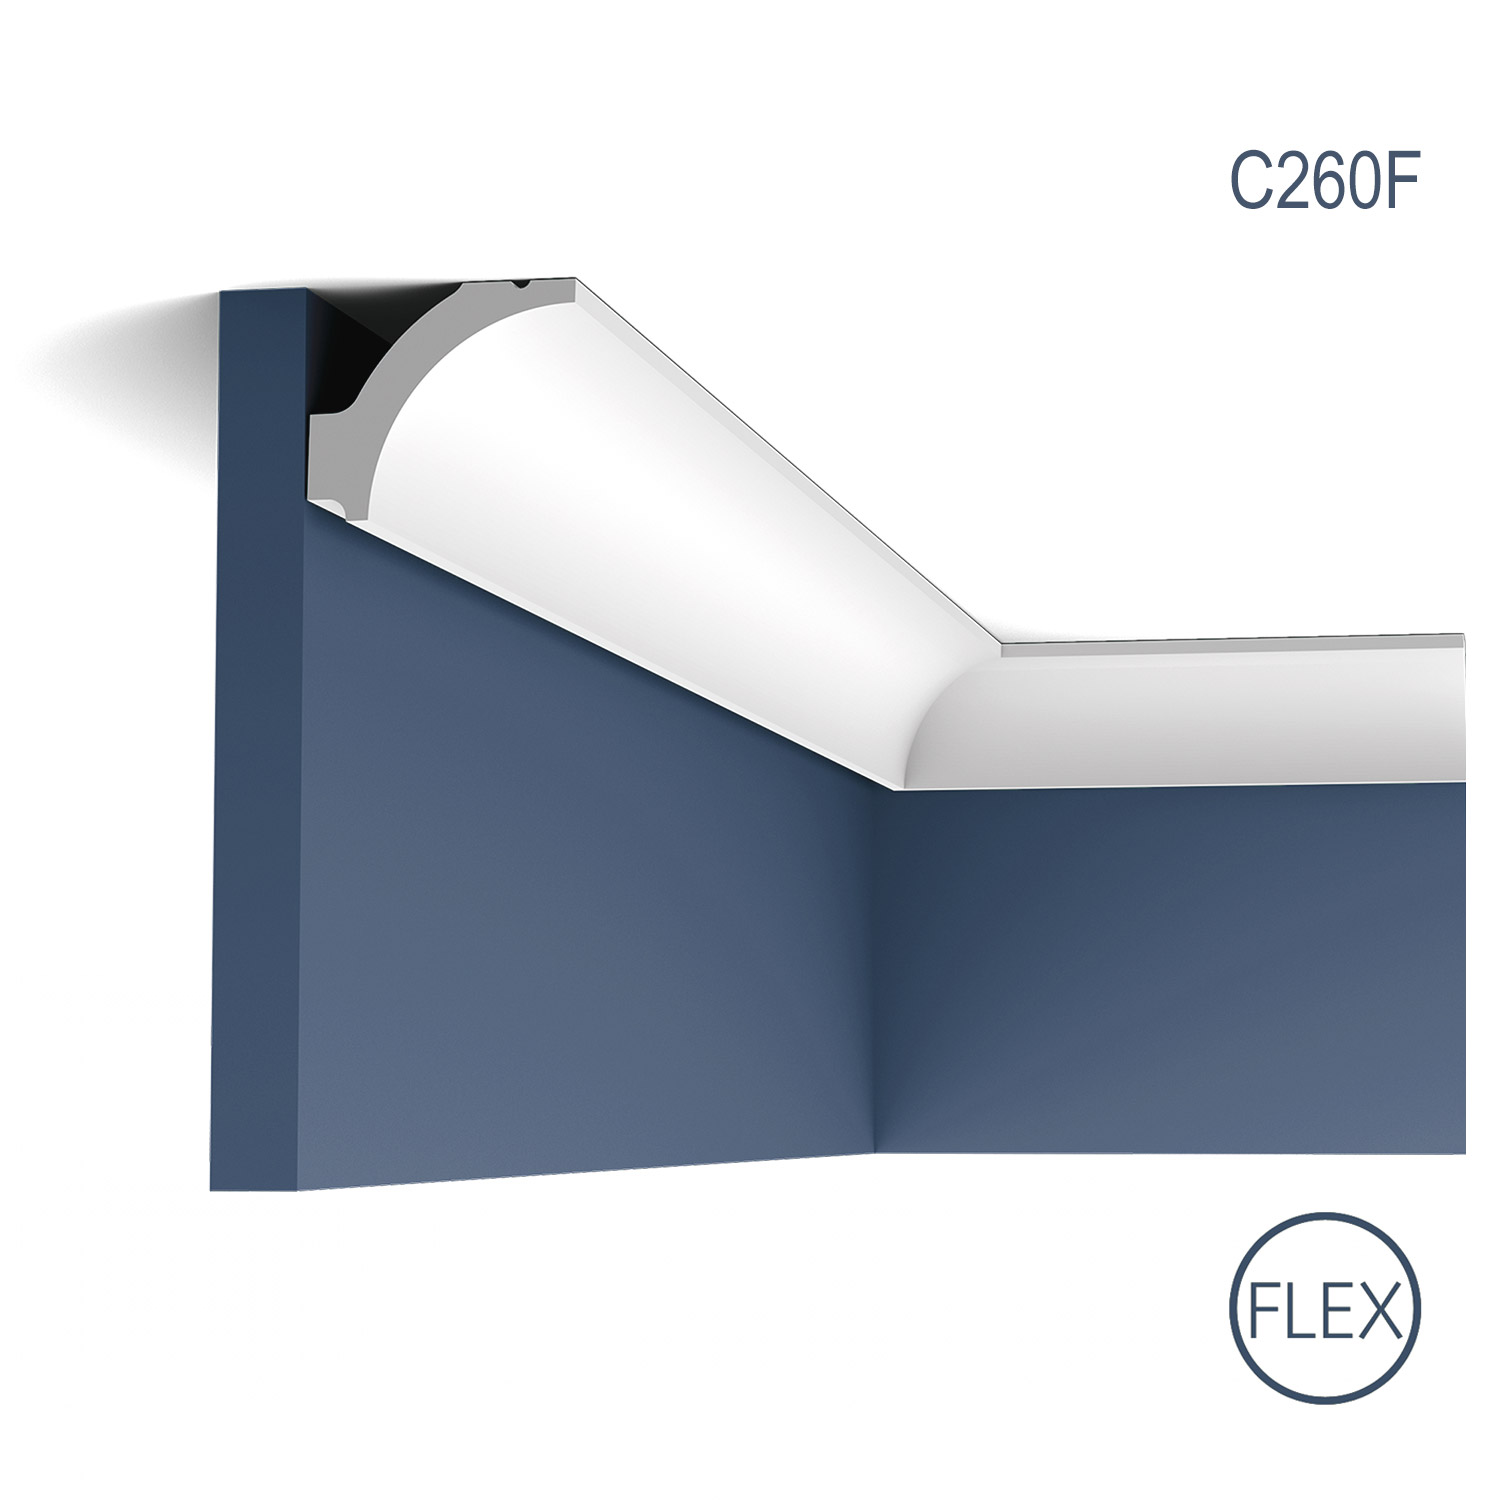 Cornisa Flex Luxxus C260F, Dimensiuni: 200 X 4.1 X 4.8 cm, Orac Decor